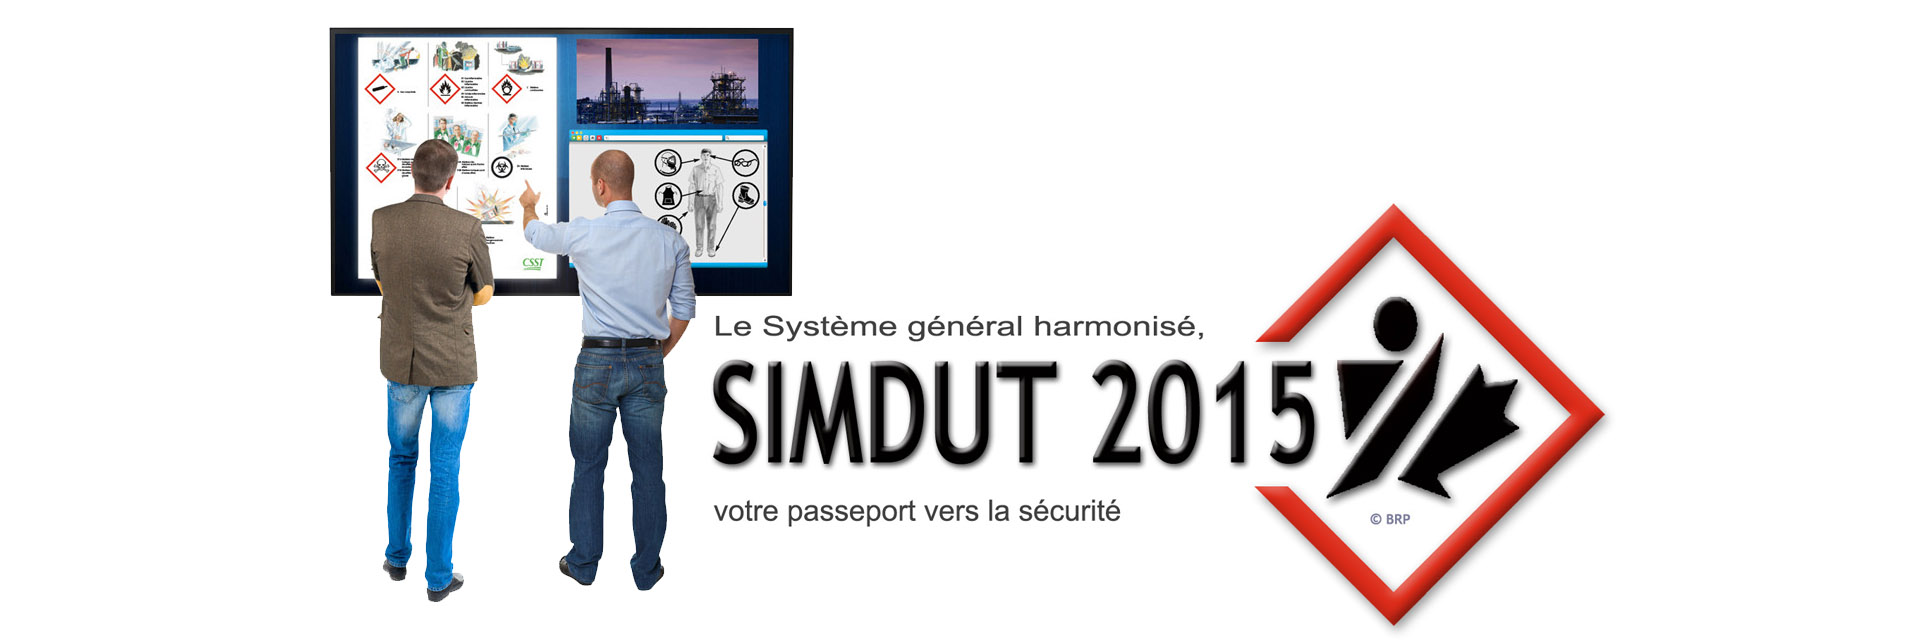 Formation SIMDUT 2015 - Cours SIMDUT en ligne